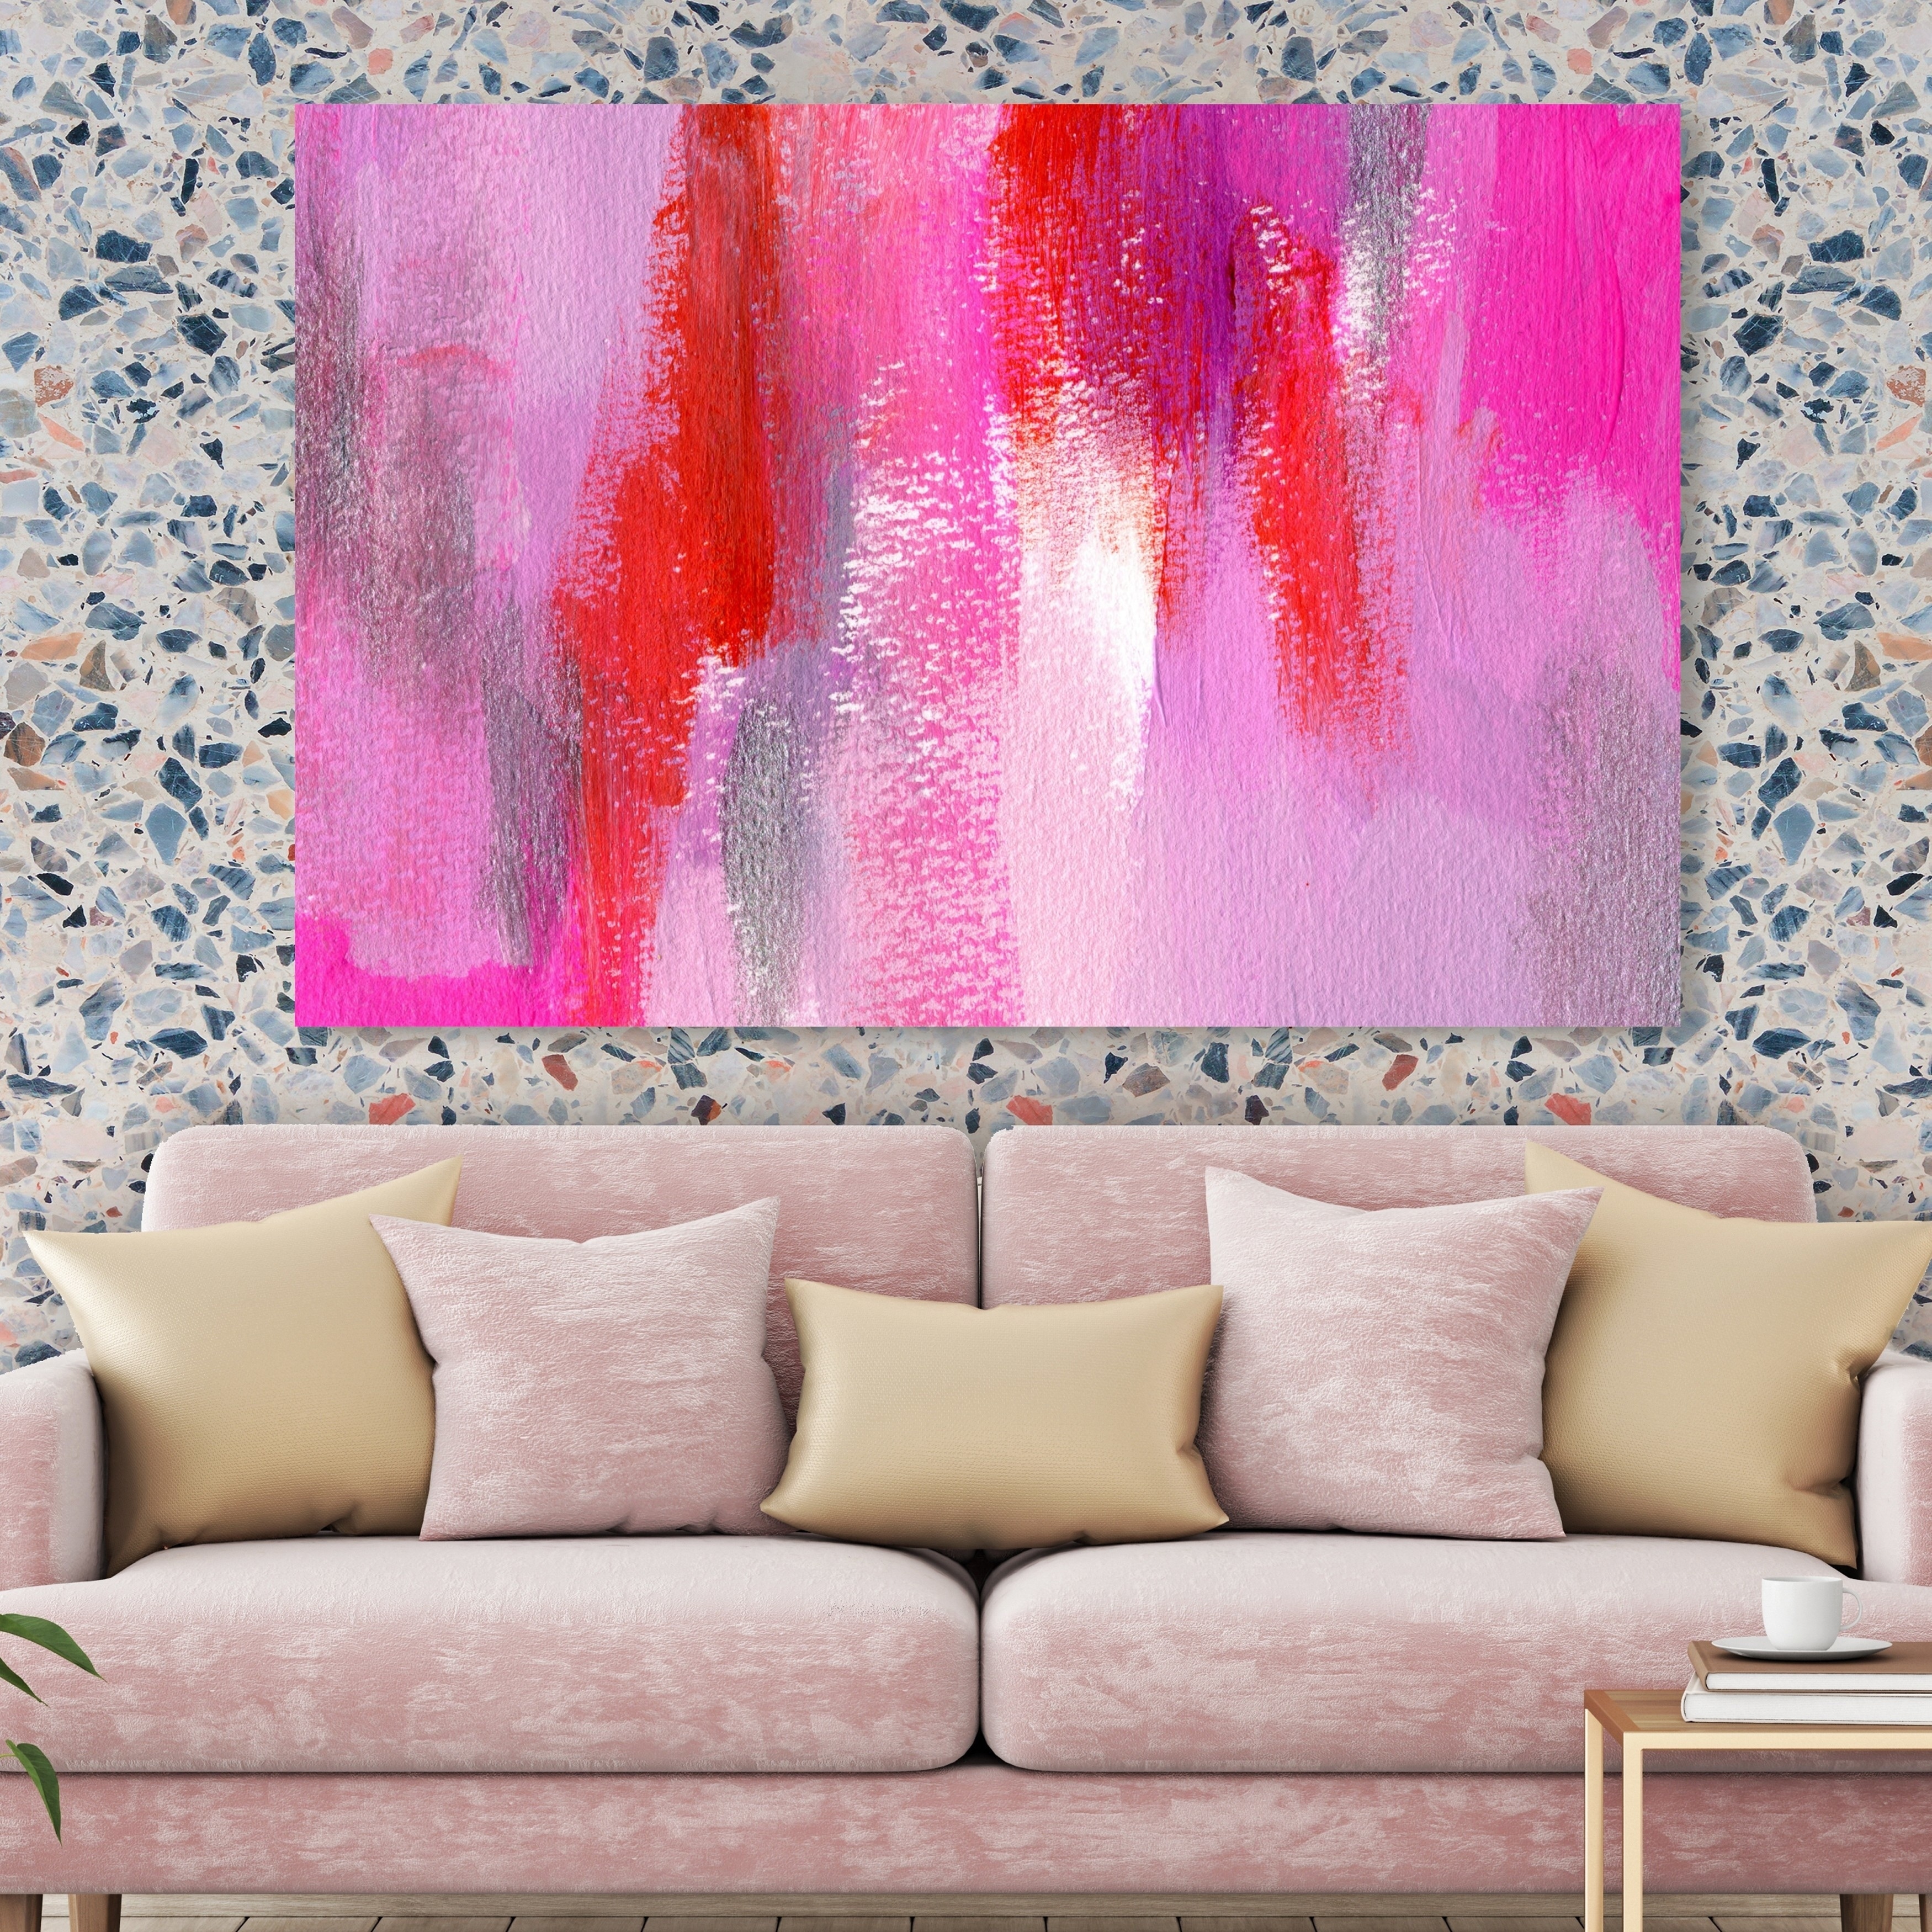 Oliver Gal 'Bonjour' Fashion and Glam Wall Art Framed Canvas Print Handbags  - Pink, Orange - Bed Bath & Beyond - 31794393